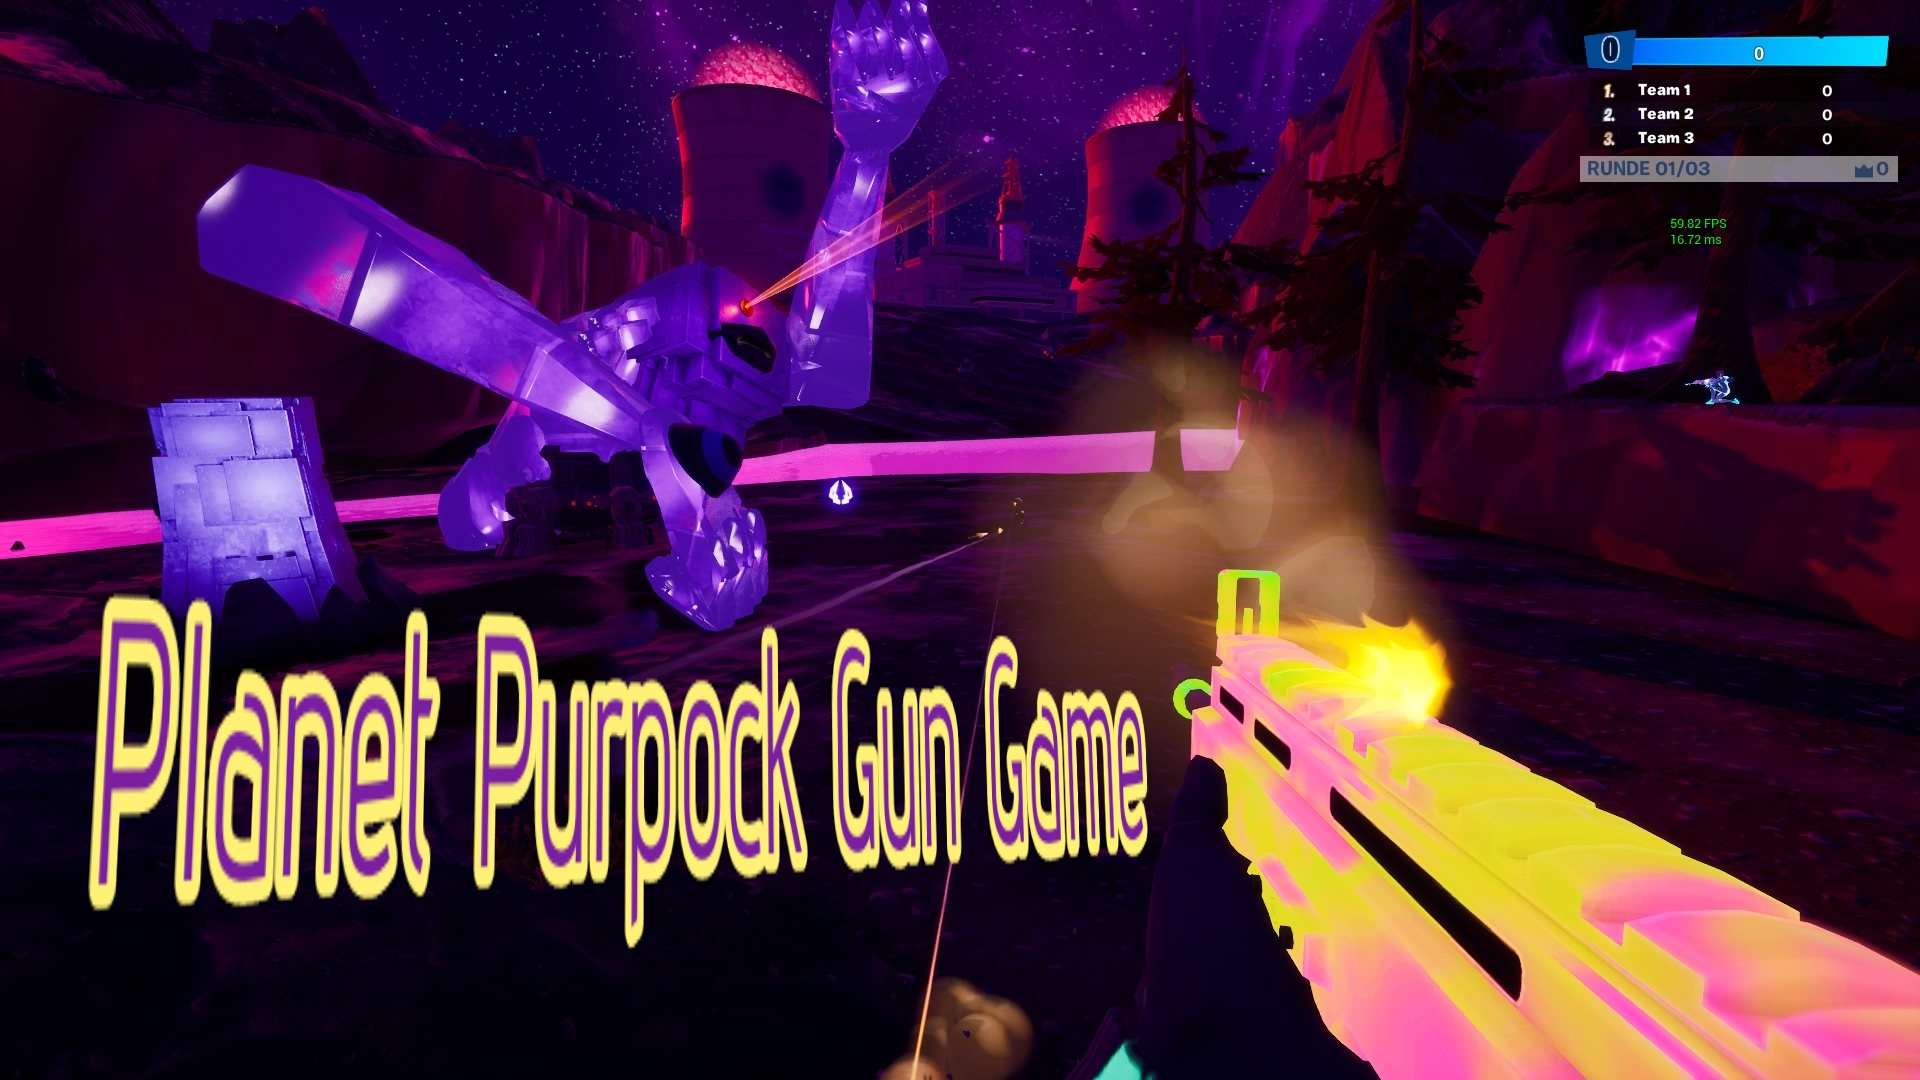 PLANET PURPOCK GUN GAME